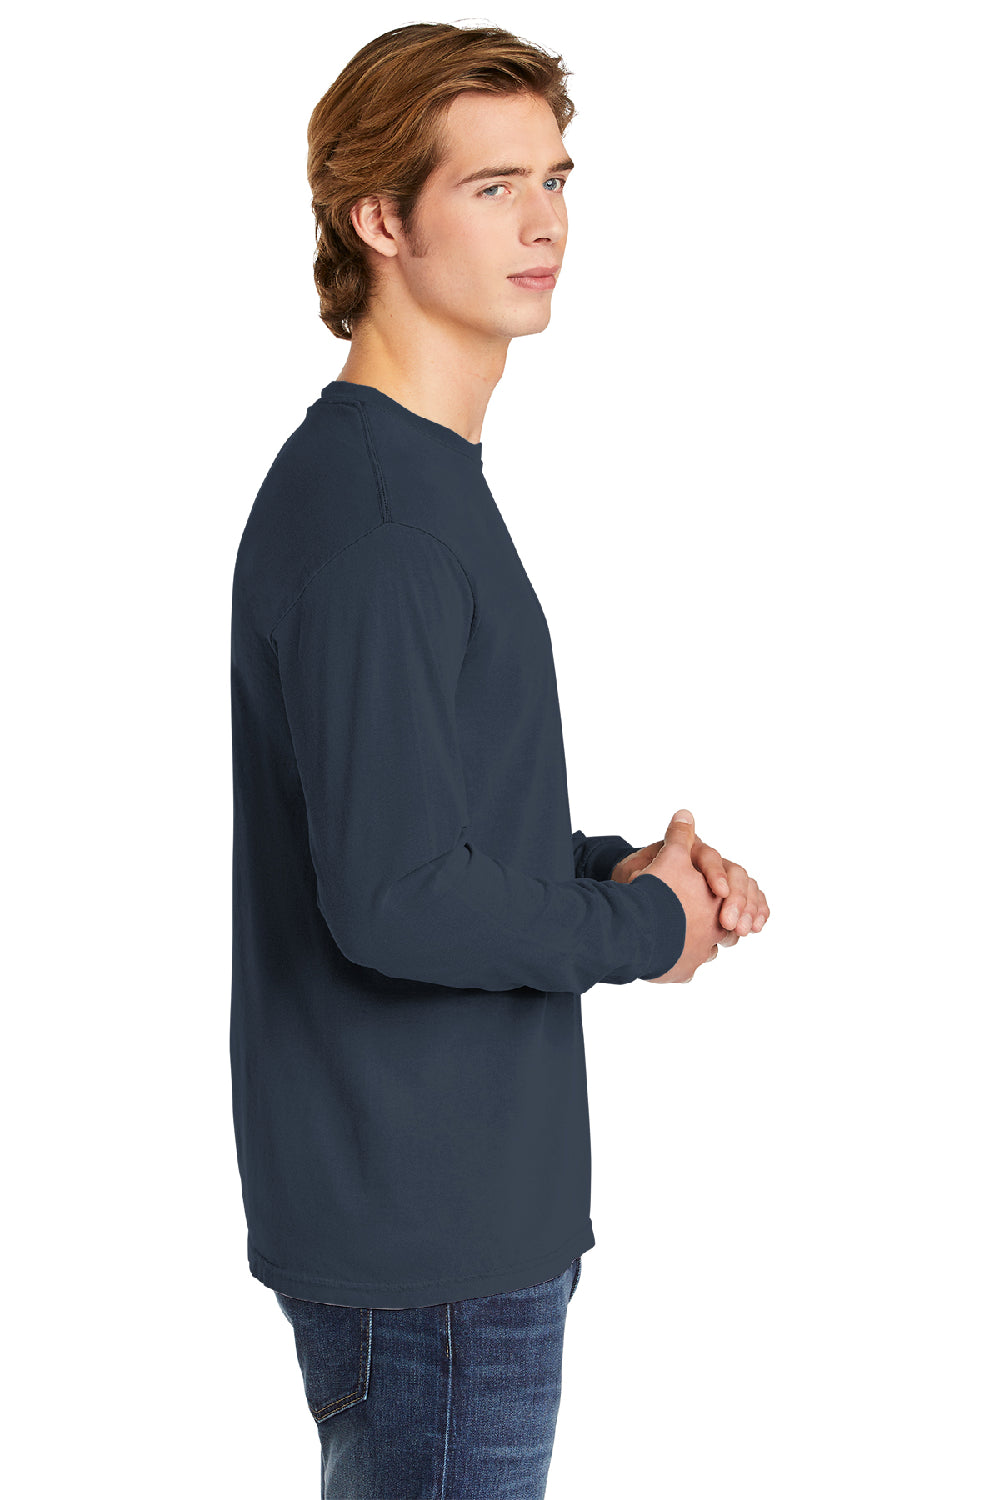 Comfort Colors 6014/C6014 Mens Long Sleeve Crewneck T-Shirt Midnight Navy Blue Side